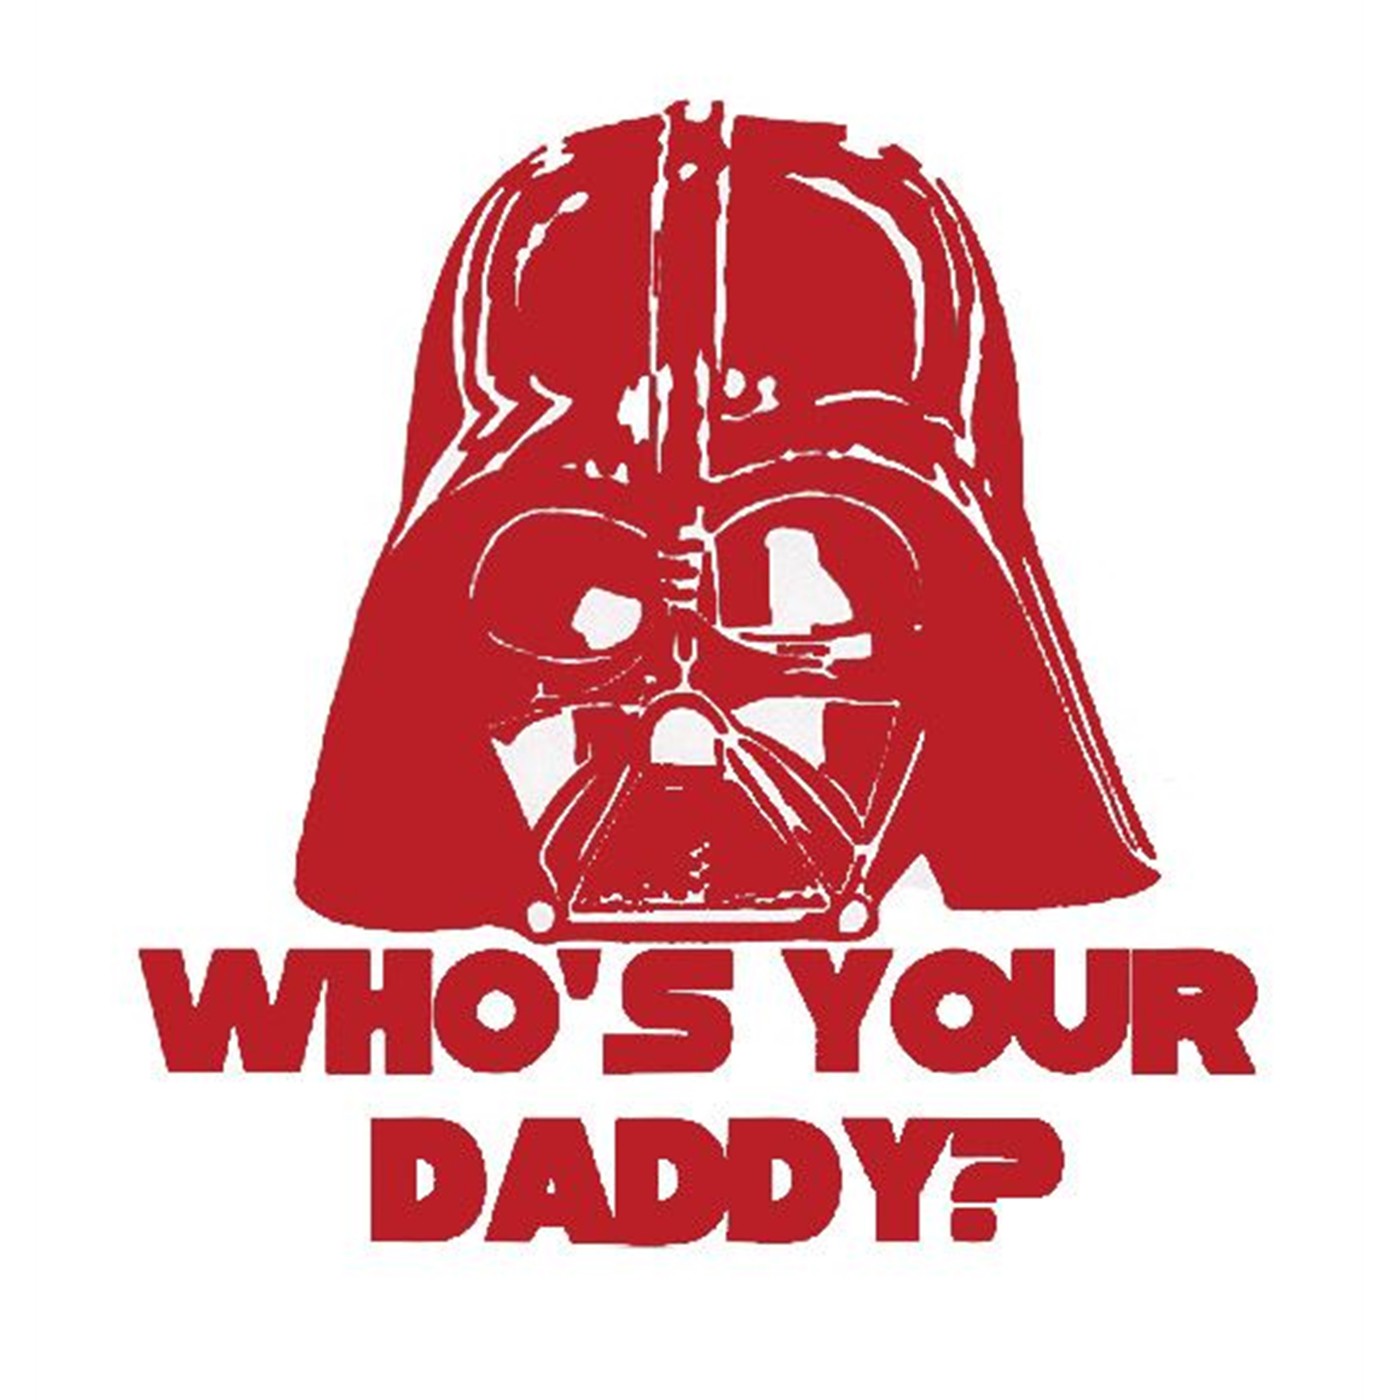 Star Wars, Shirts, Black Starwars Tshirt With Darth Vader Whos Your Daddy